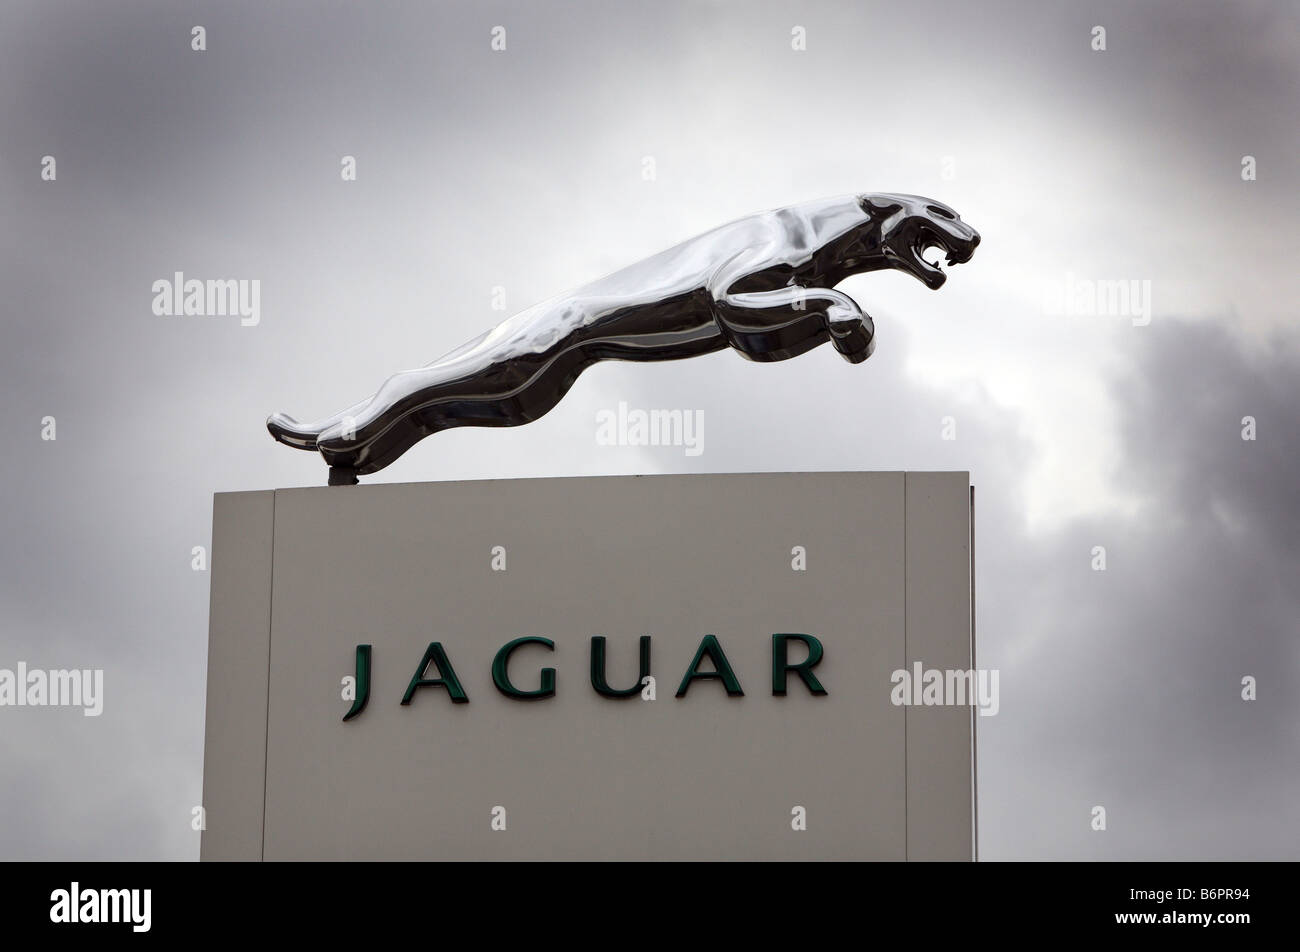 Jaguar car dealers showroom sign Stock Photo